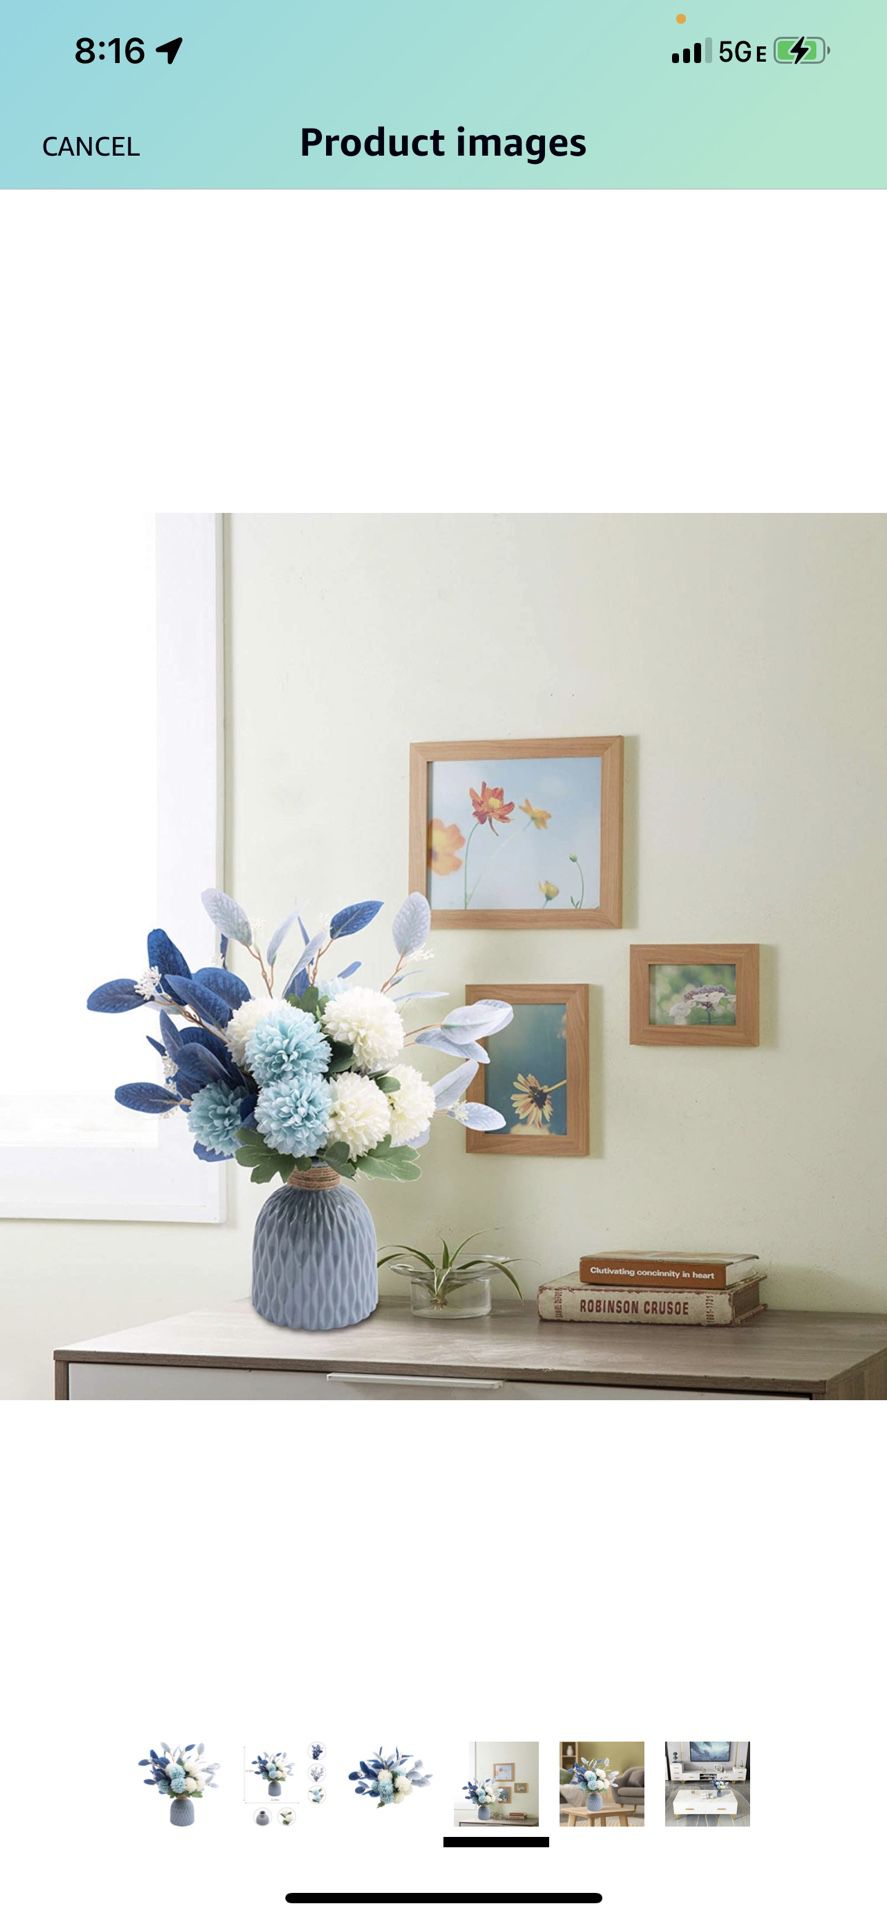 Flowerart Artificial Flowers with Ceramic Vase, 